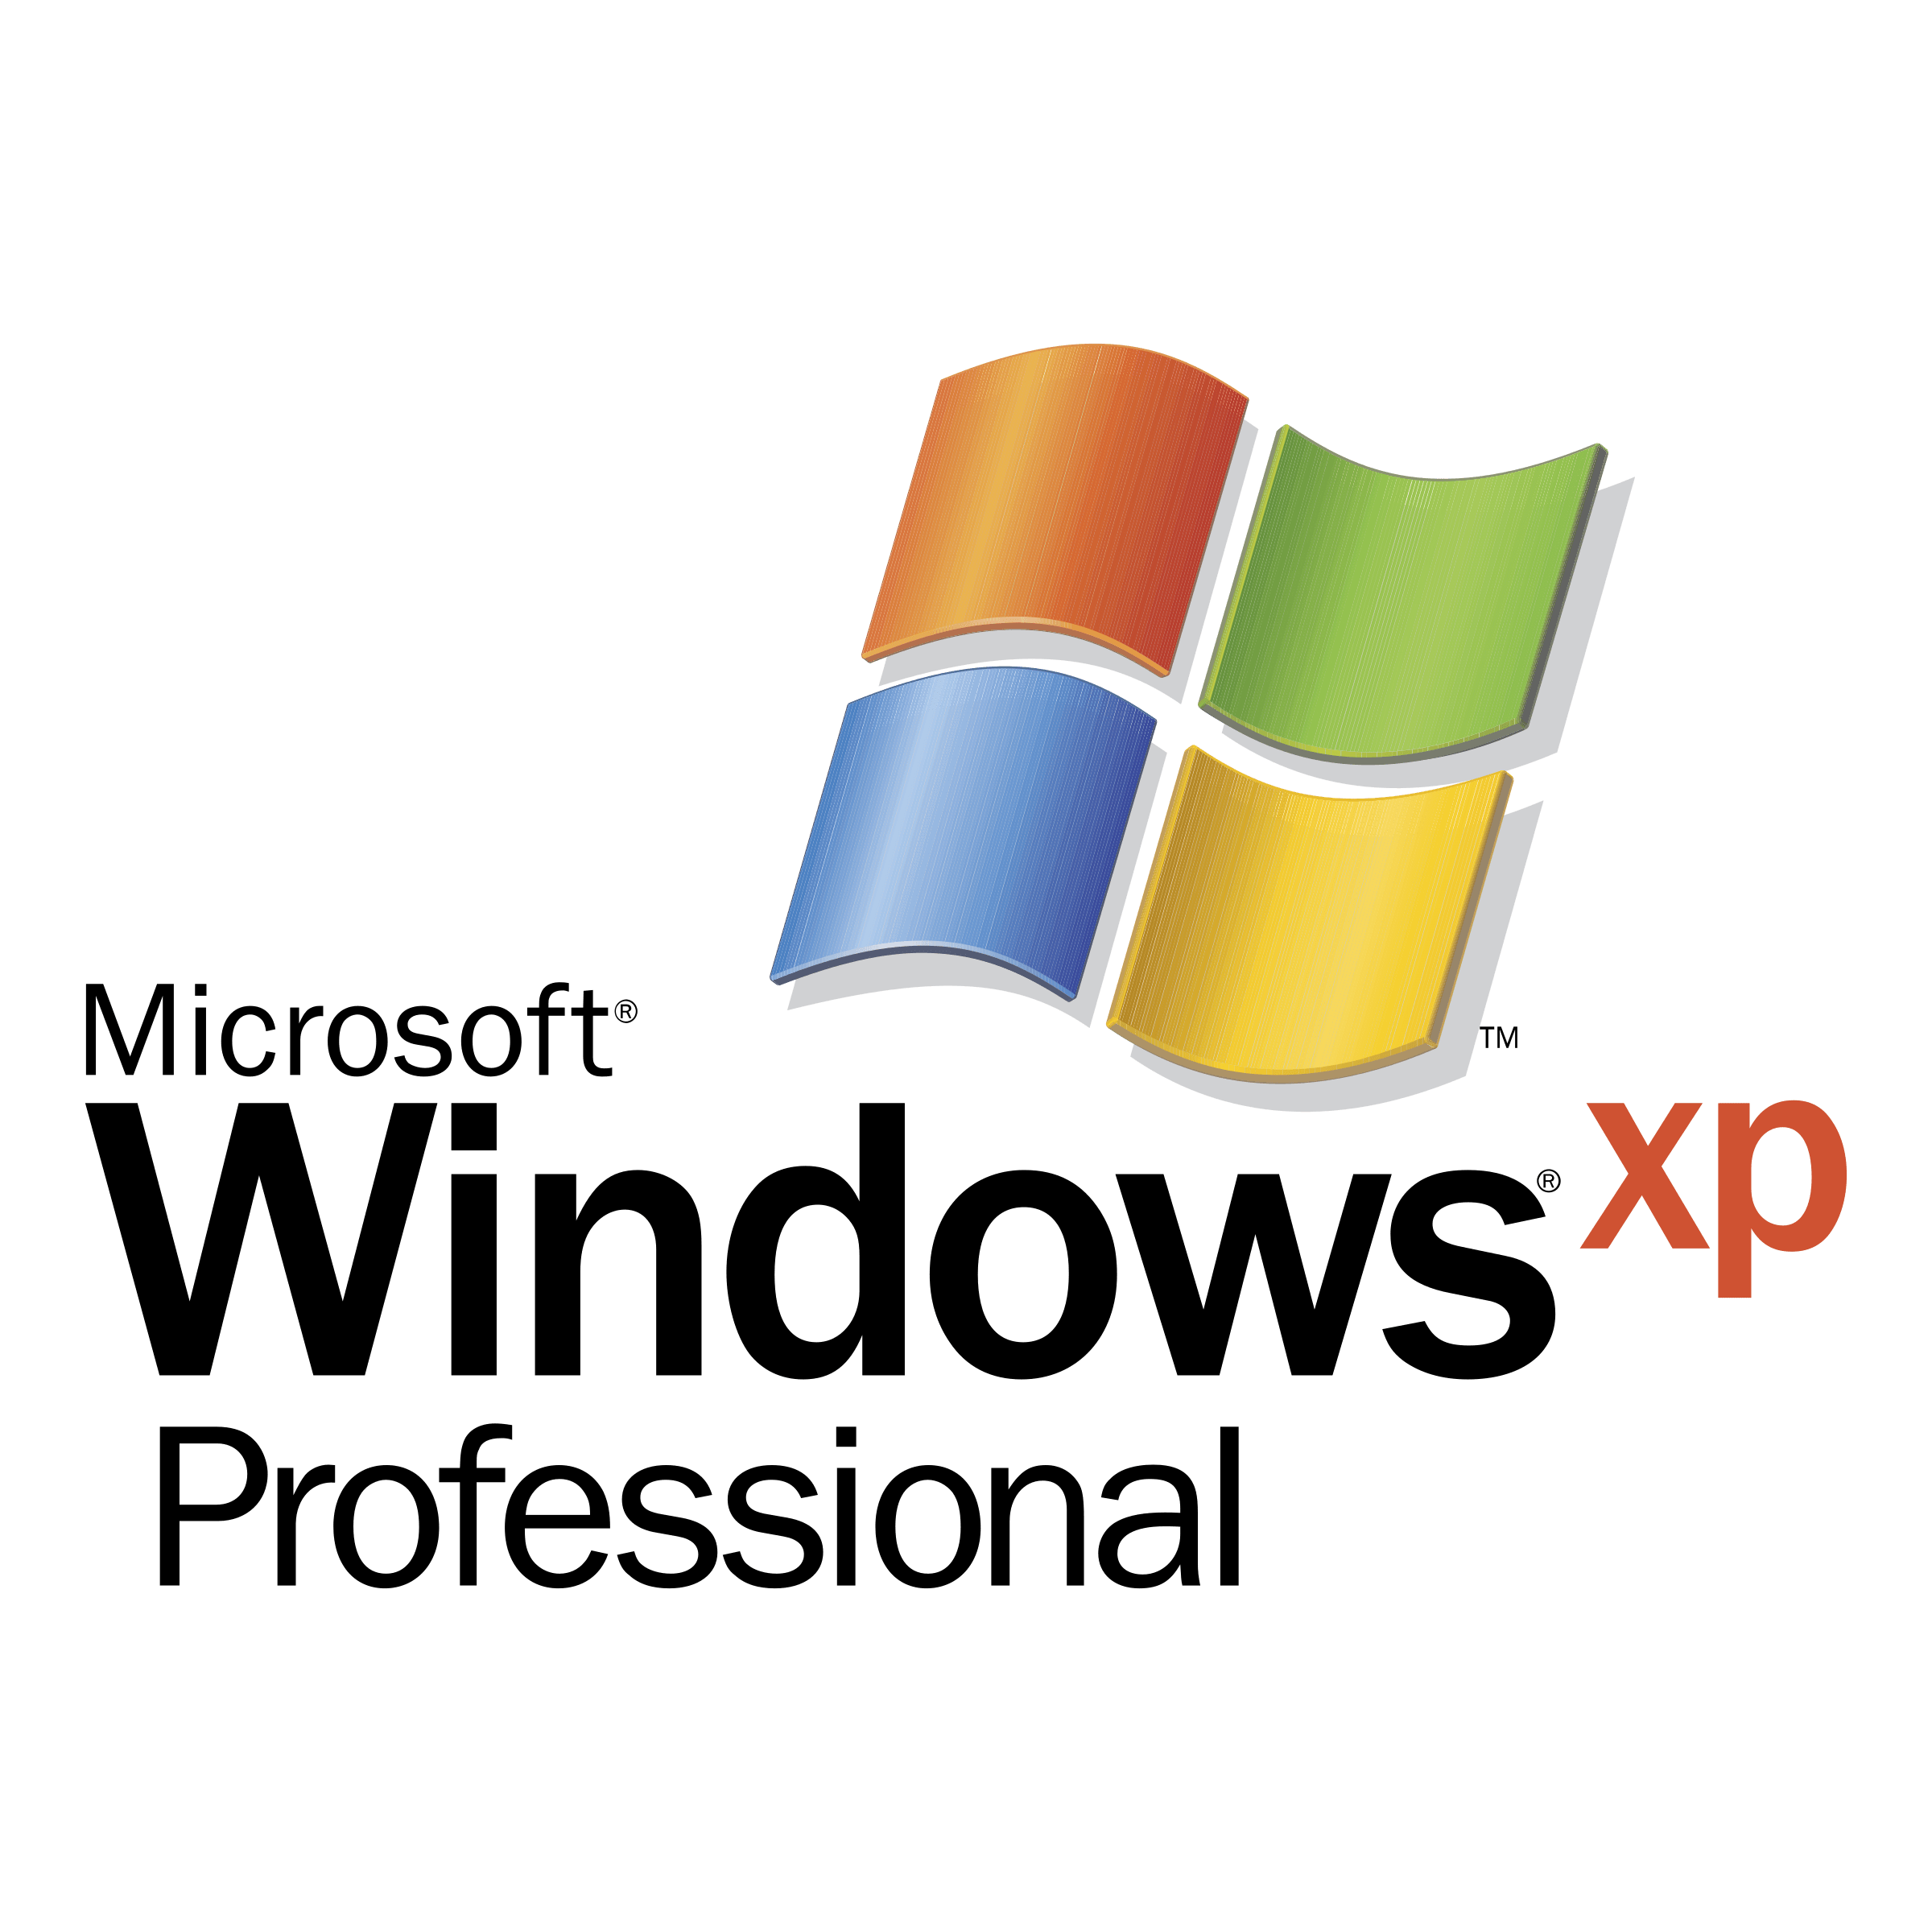 Windows 1 Logo - Microsoft Windows XP Professional Logo PNG Transparent & SVG Vector ...